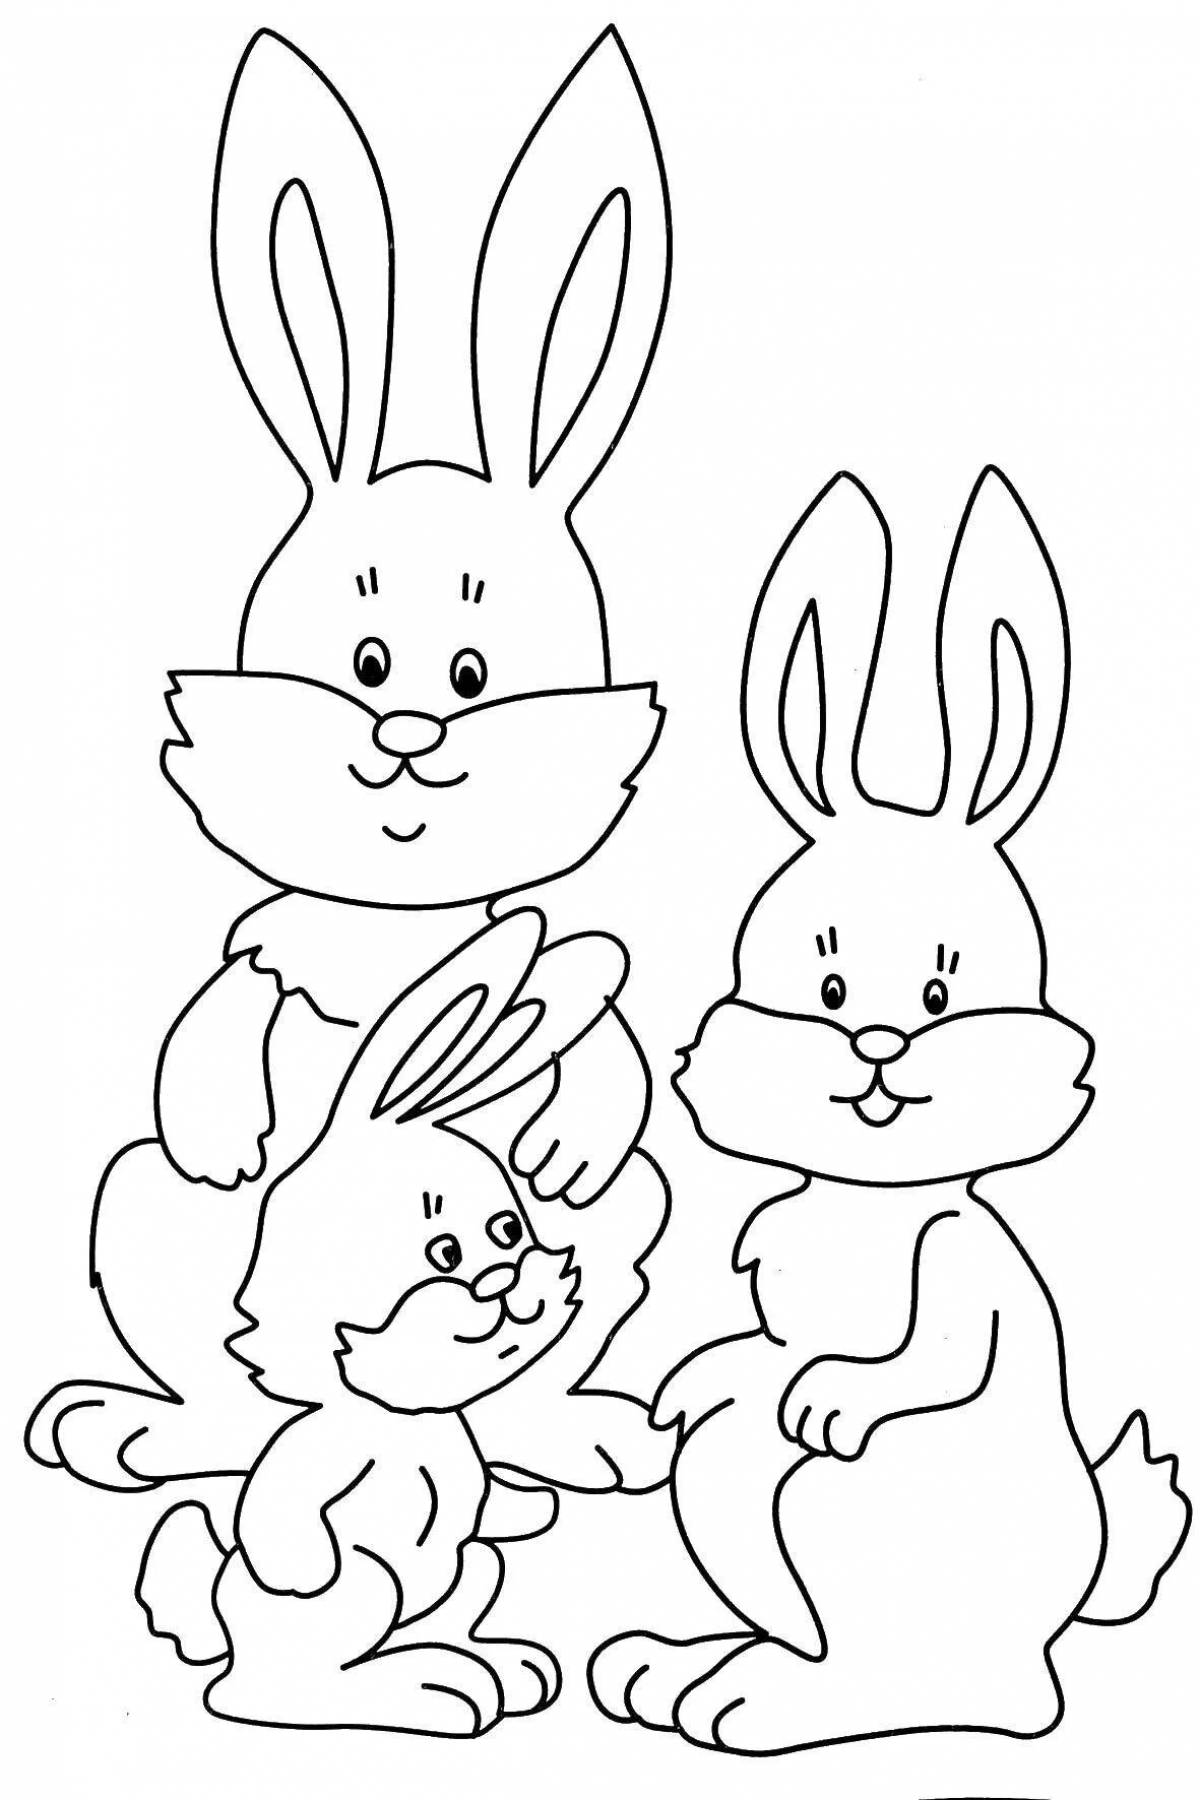 Hare family #1